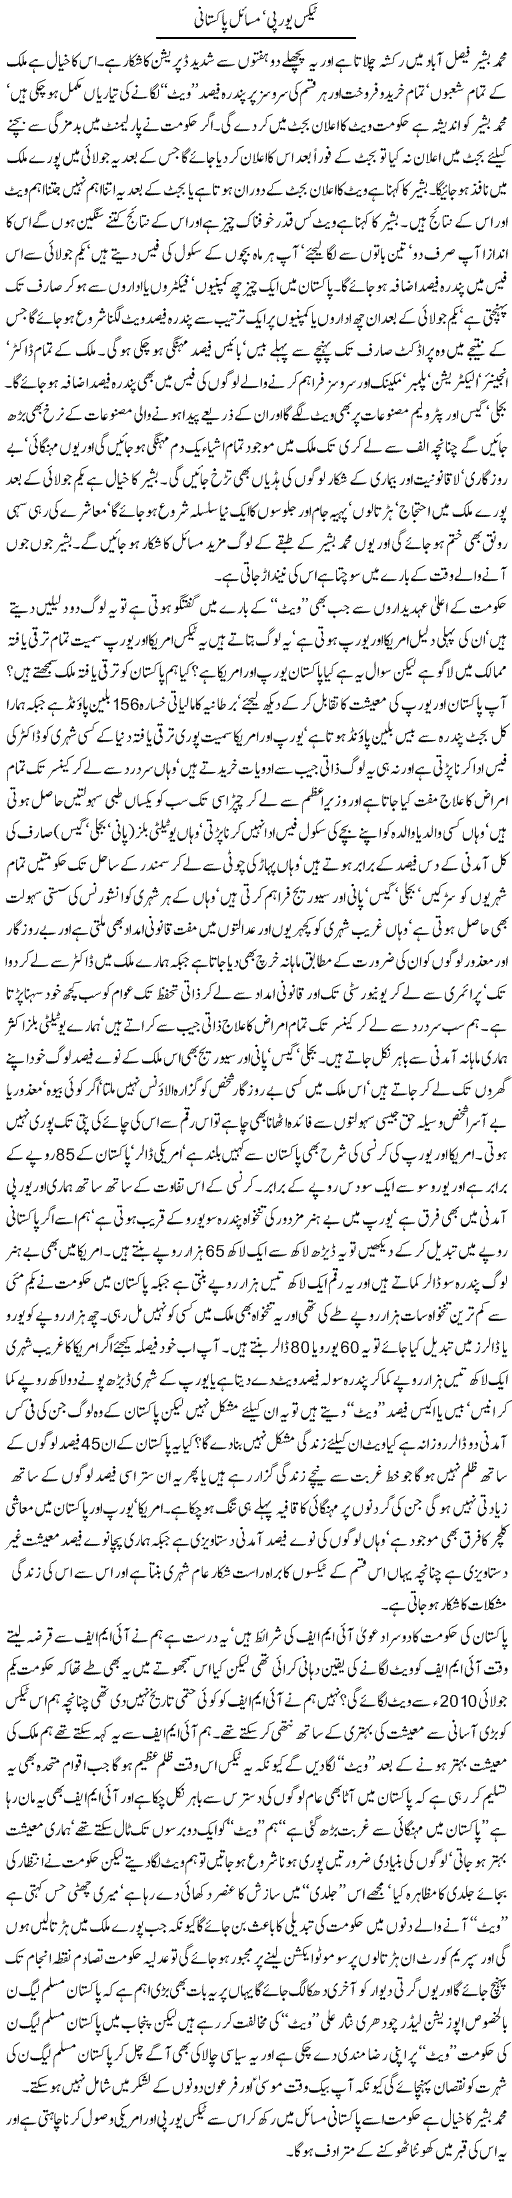 Pakistani Masail Express Column Javed Chaudhary 4 June 2010